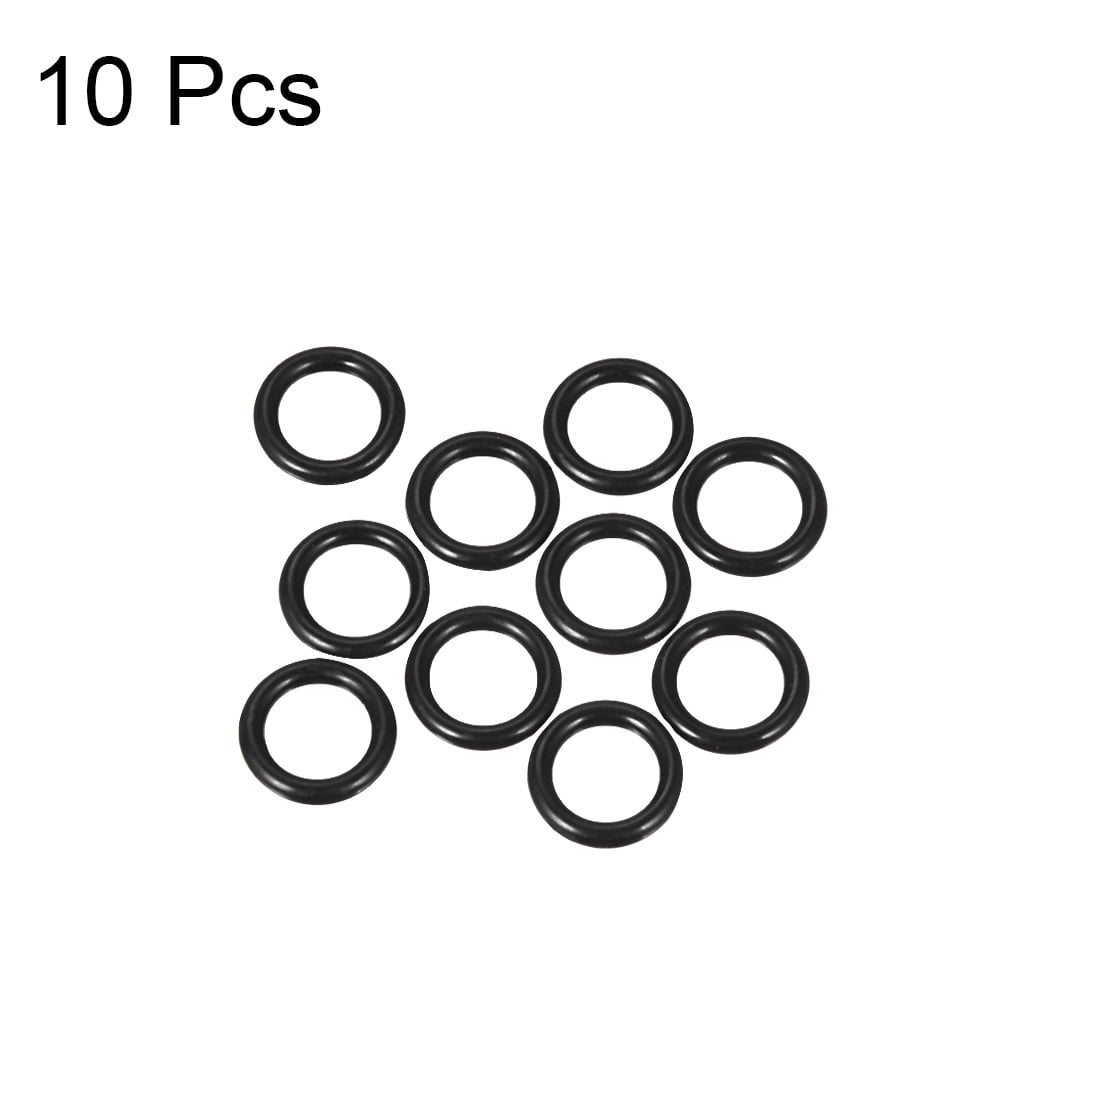 Metric Buna  O-rings 34 x 2.5mm Price for 10 pcs